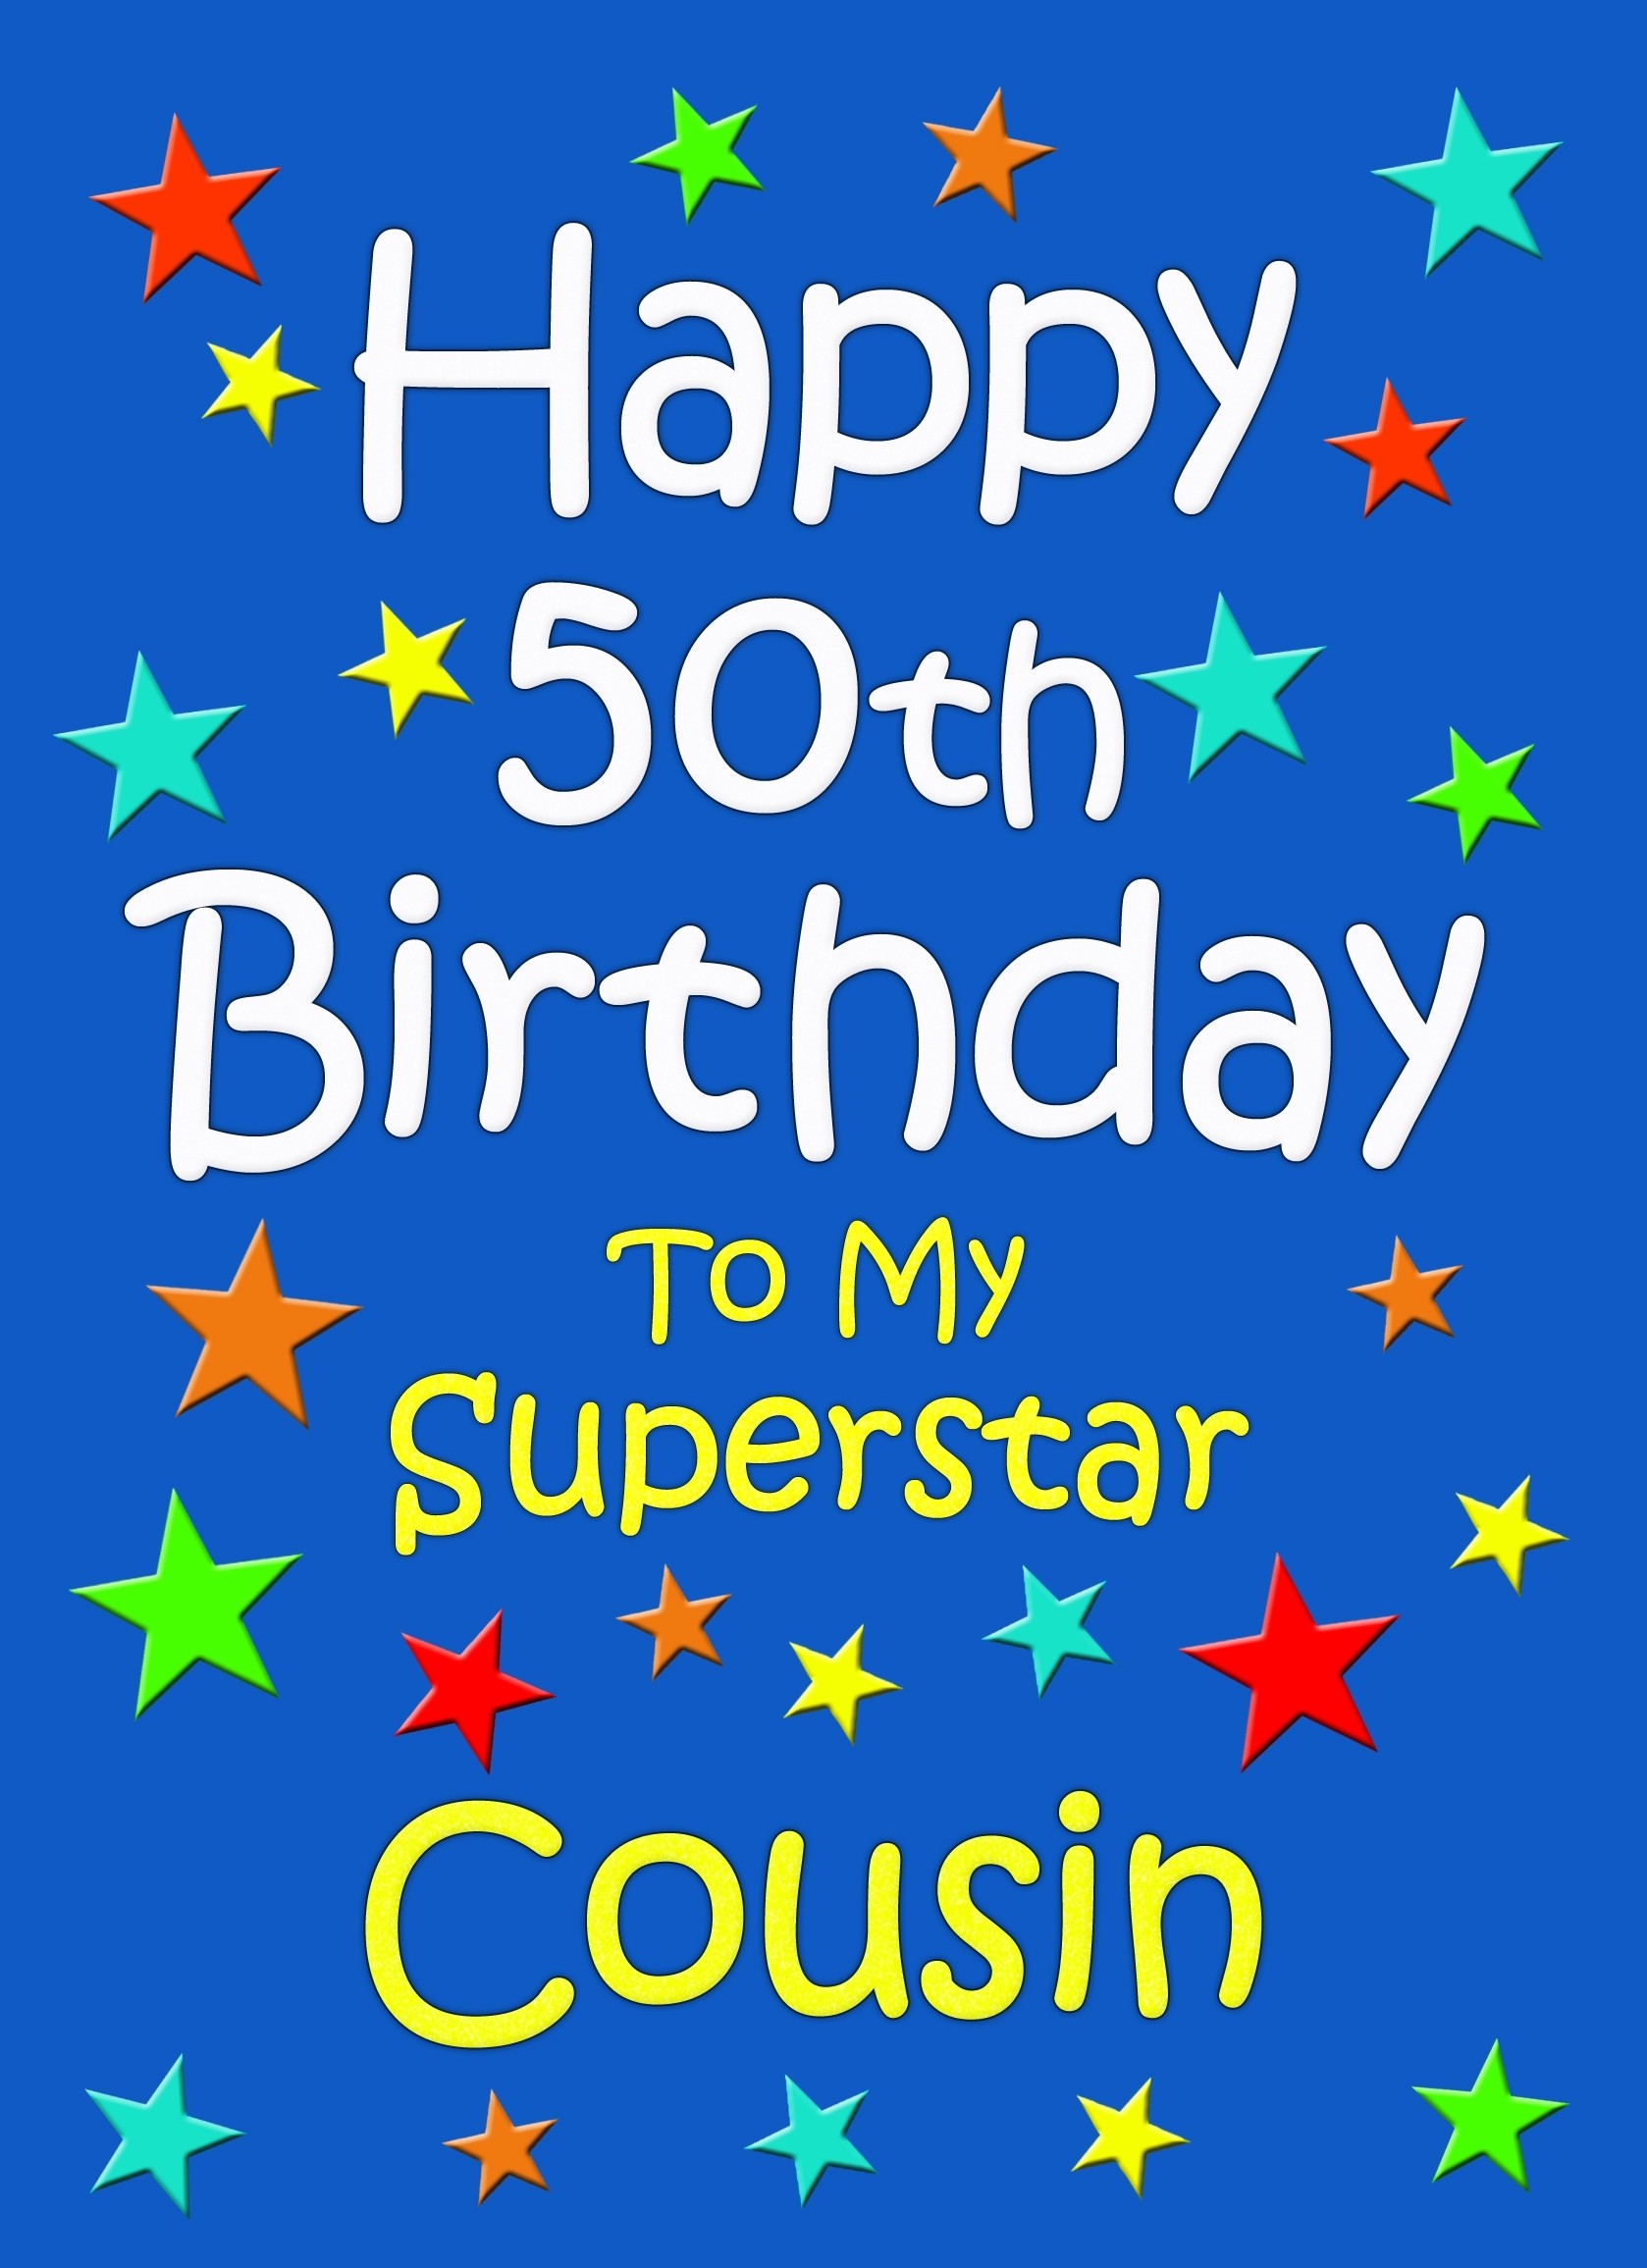 Cousin 50th Birthday Card (Blue)